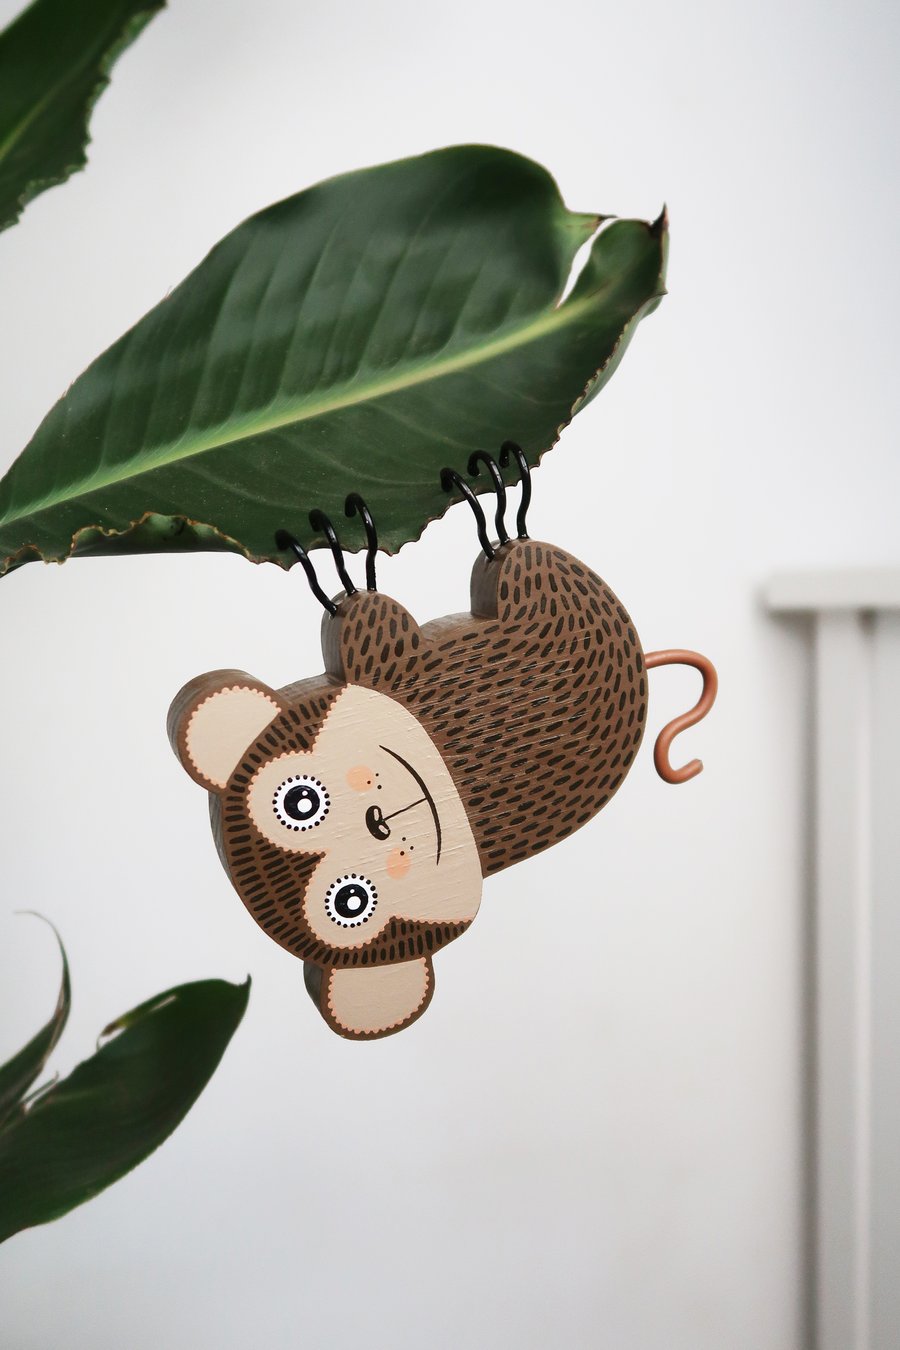 Hanging monkey plant decoration, crazy plant lady gift, cute animal ornament.